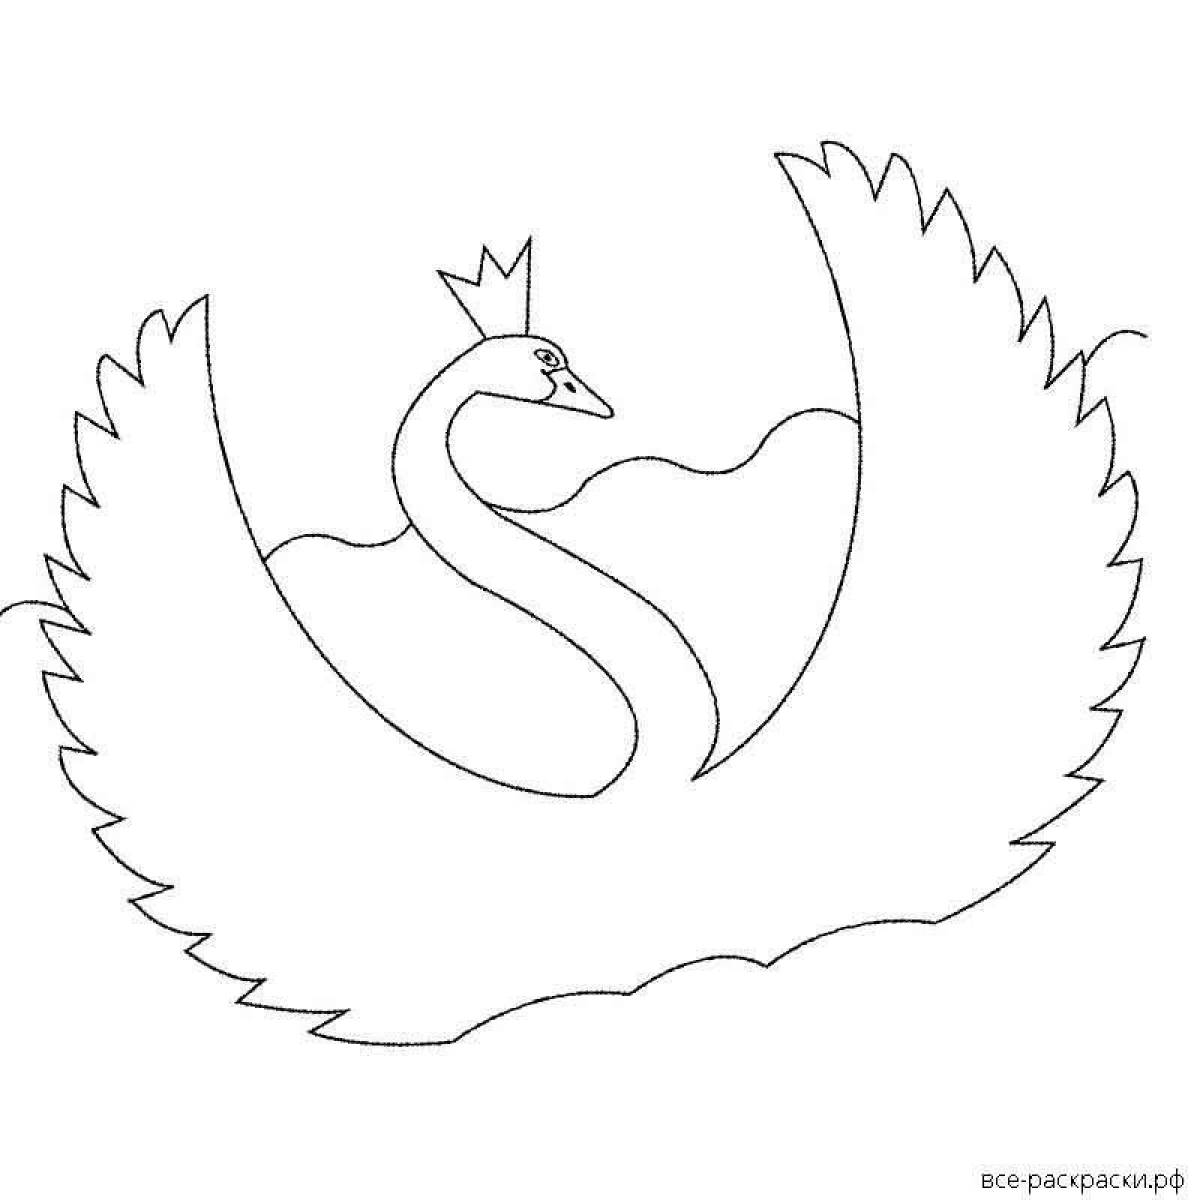 Charming coloring princess swan